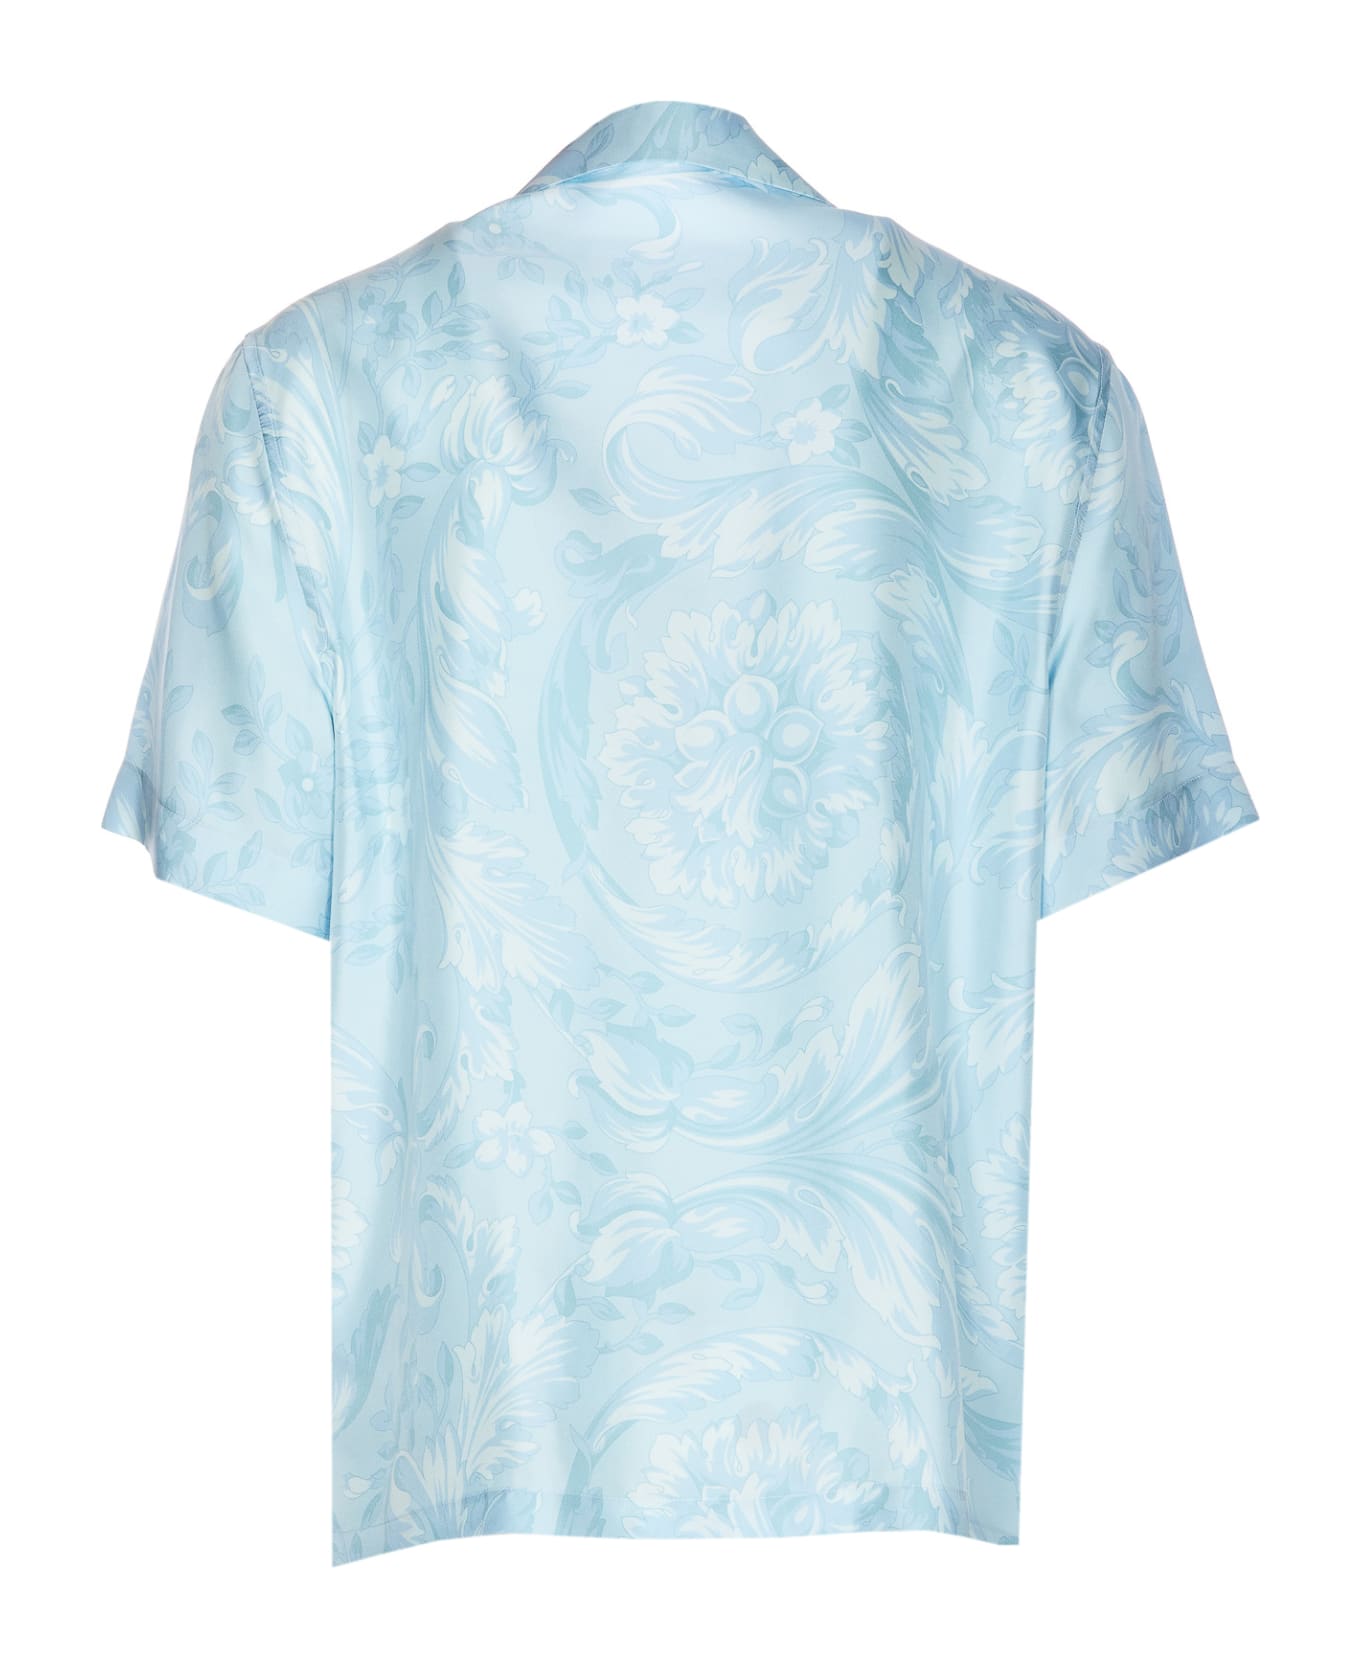 Versace Barocco Shirt - Pale blue